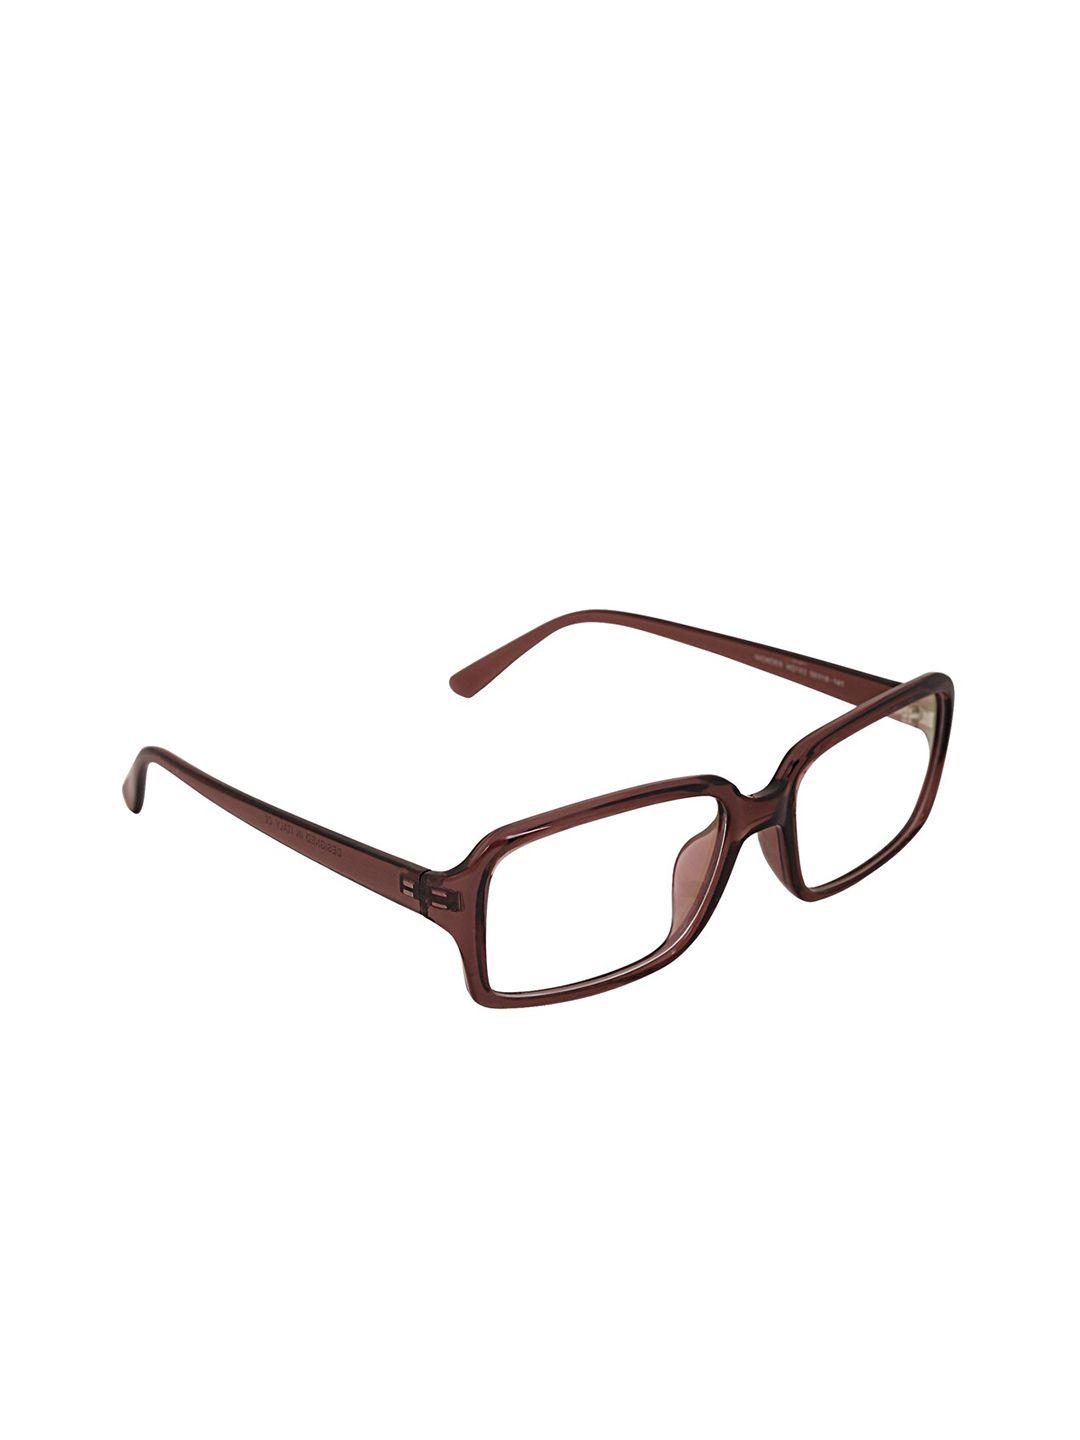 peter jones eyewear unisex brown full rim square frames computer glasses